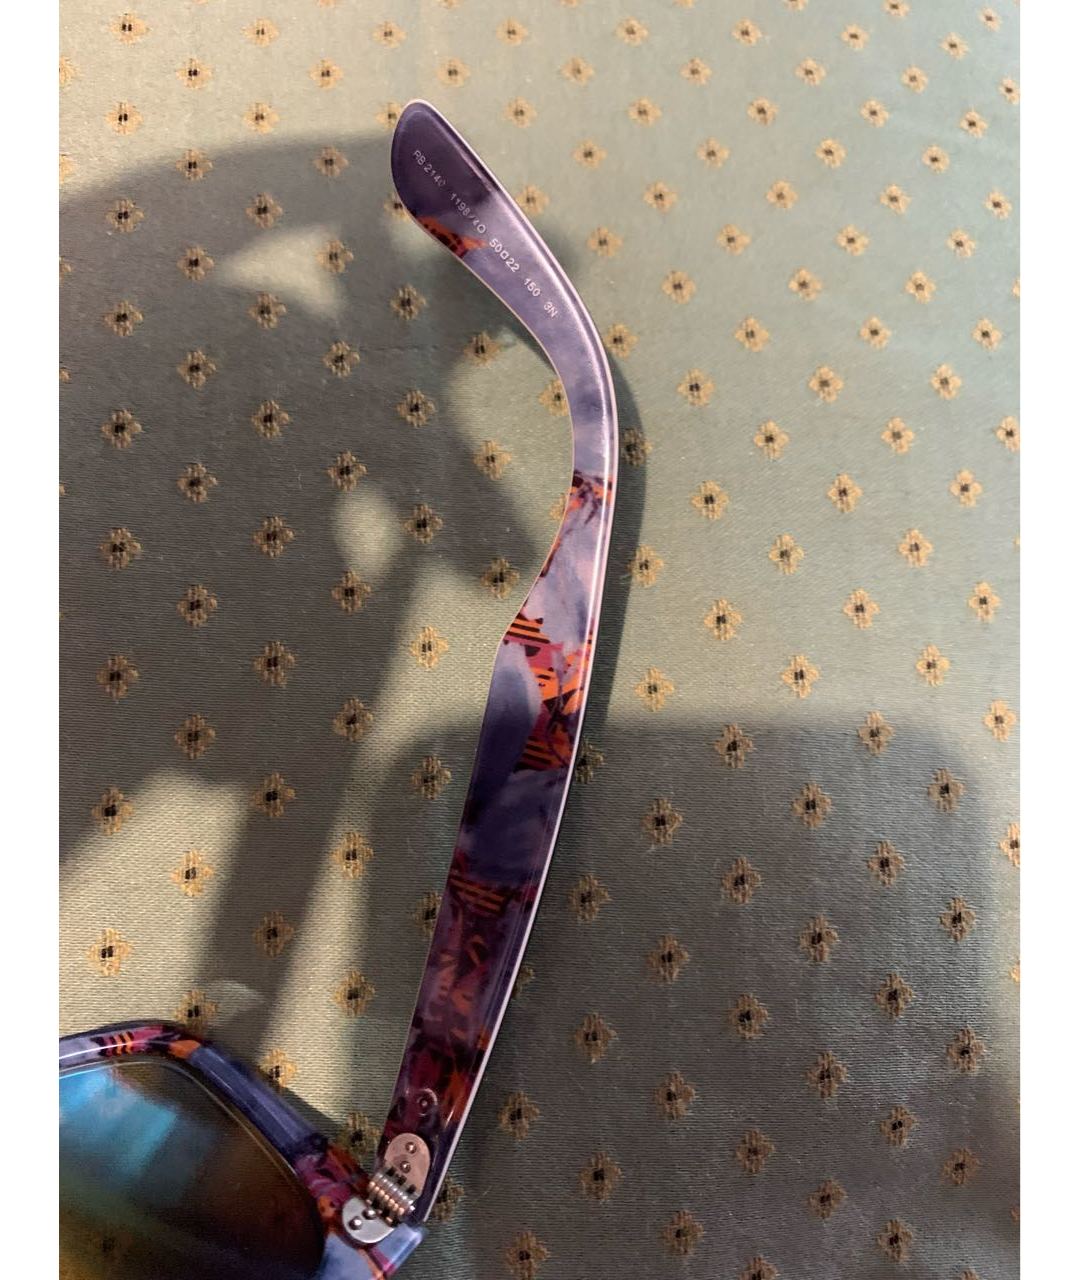 RAY BAN Темно-синие пластиковые солнцезащитные очки, фото 3